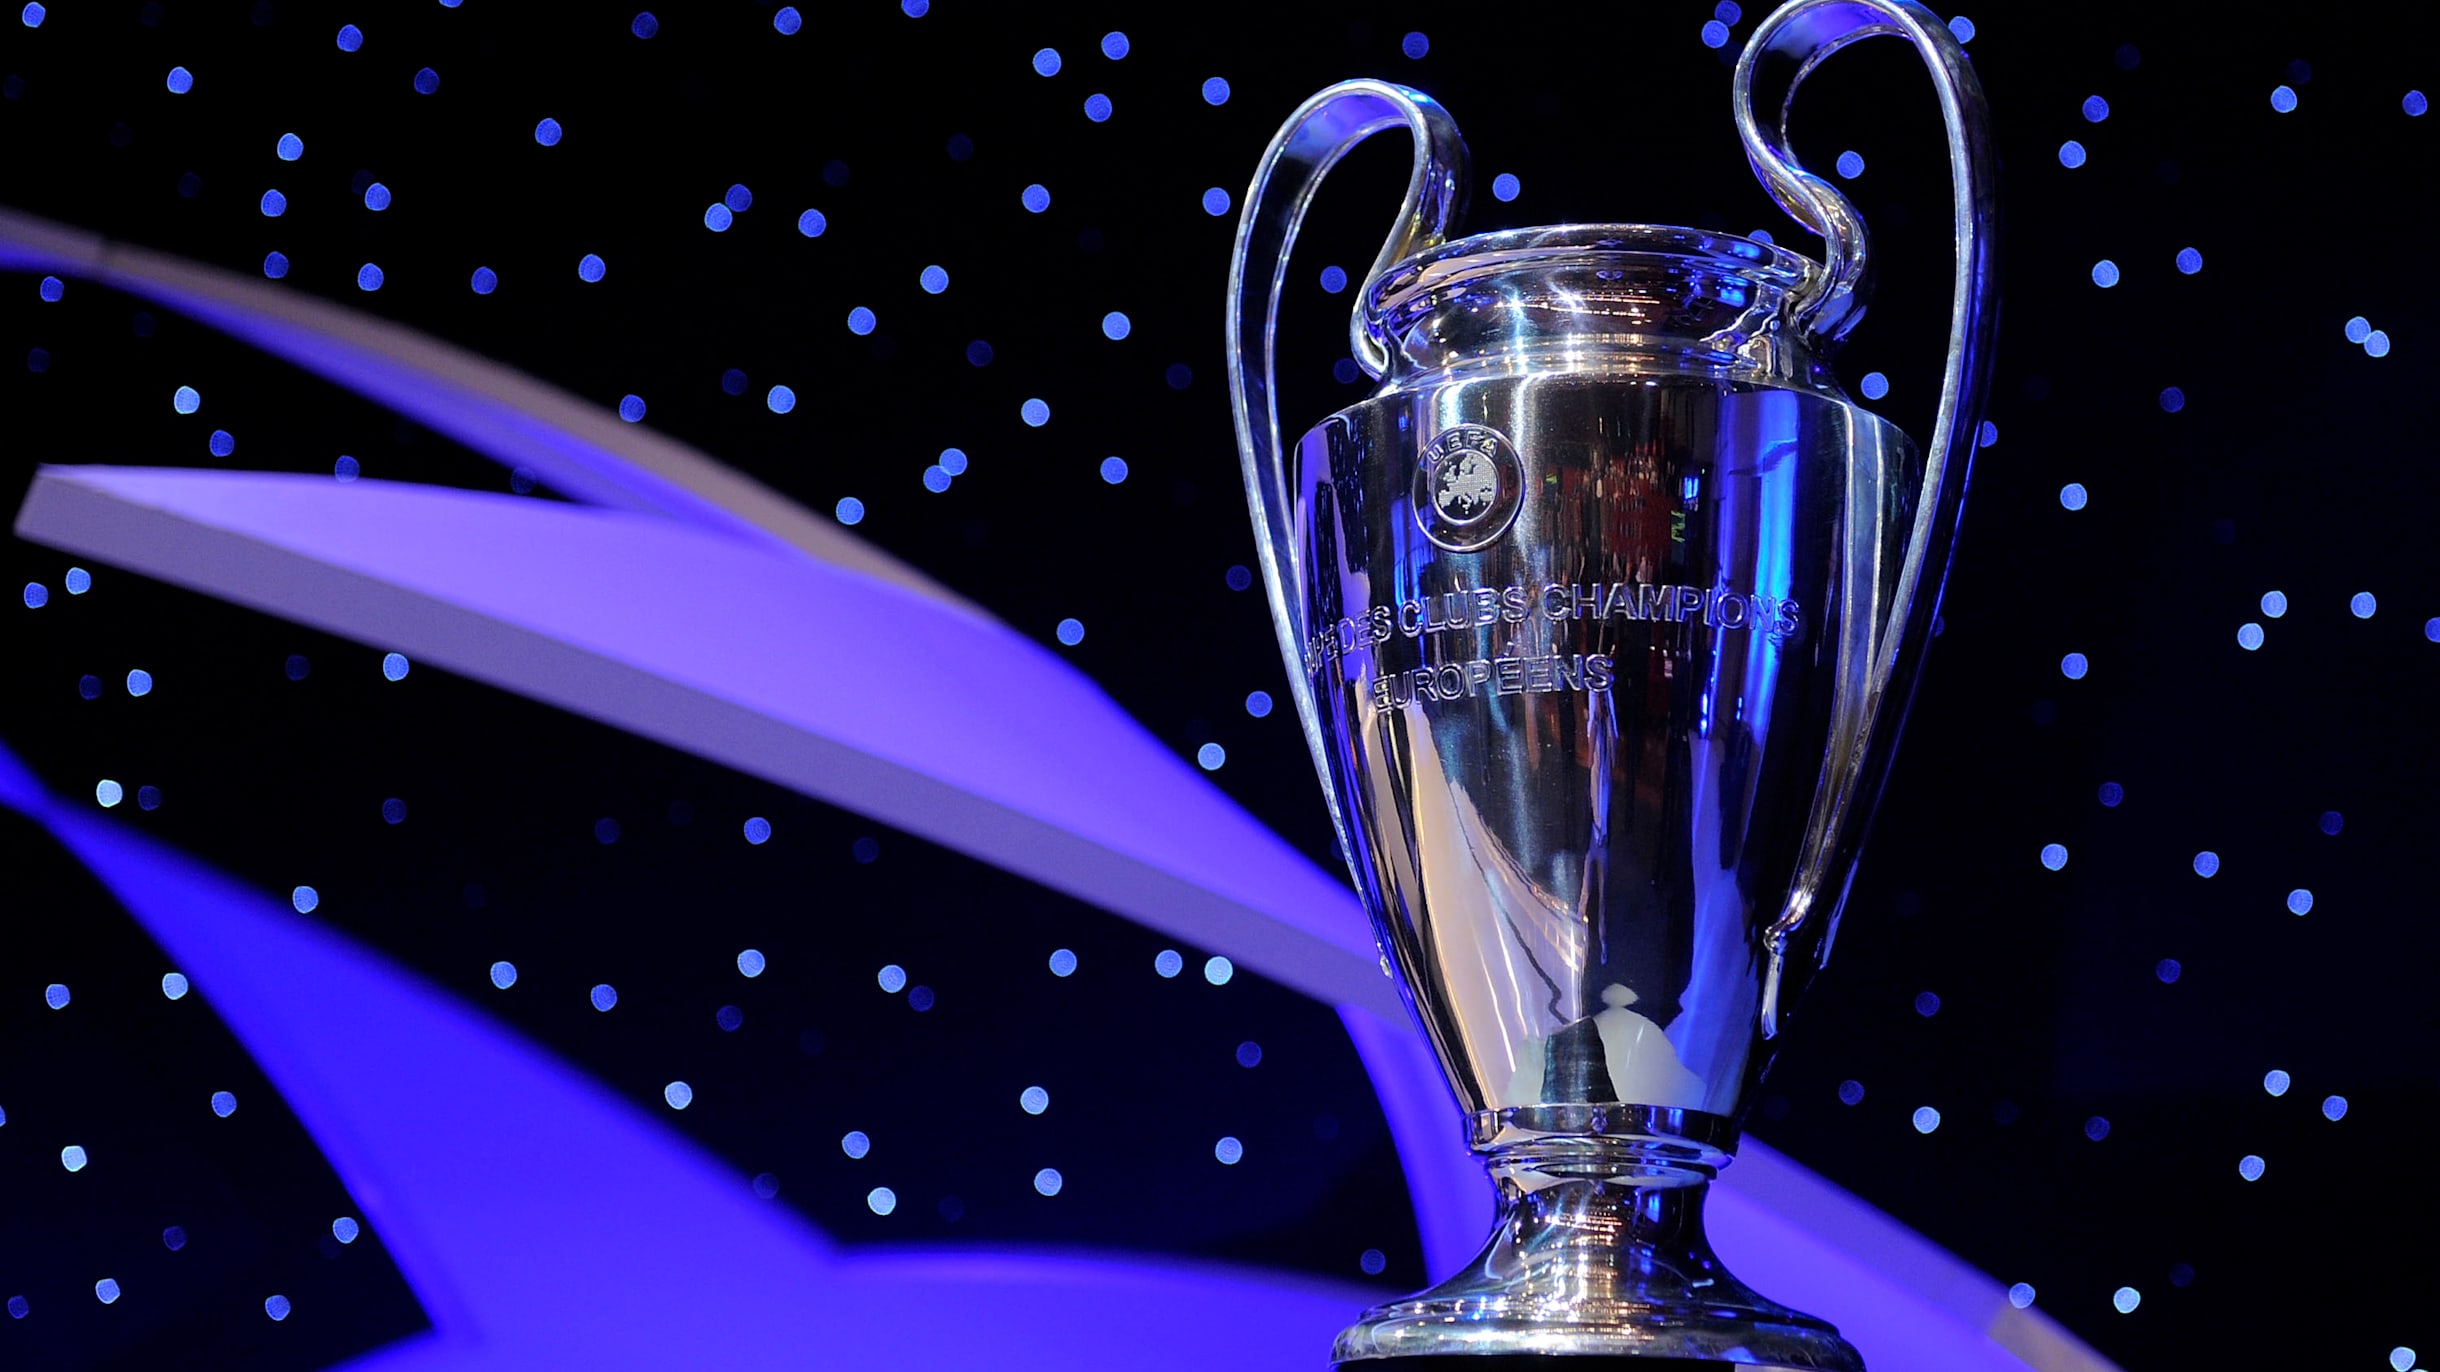 UEFA Champions League quarter-final, semi-final and final draws, UEFA  Champions League 2022/23